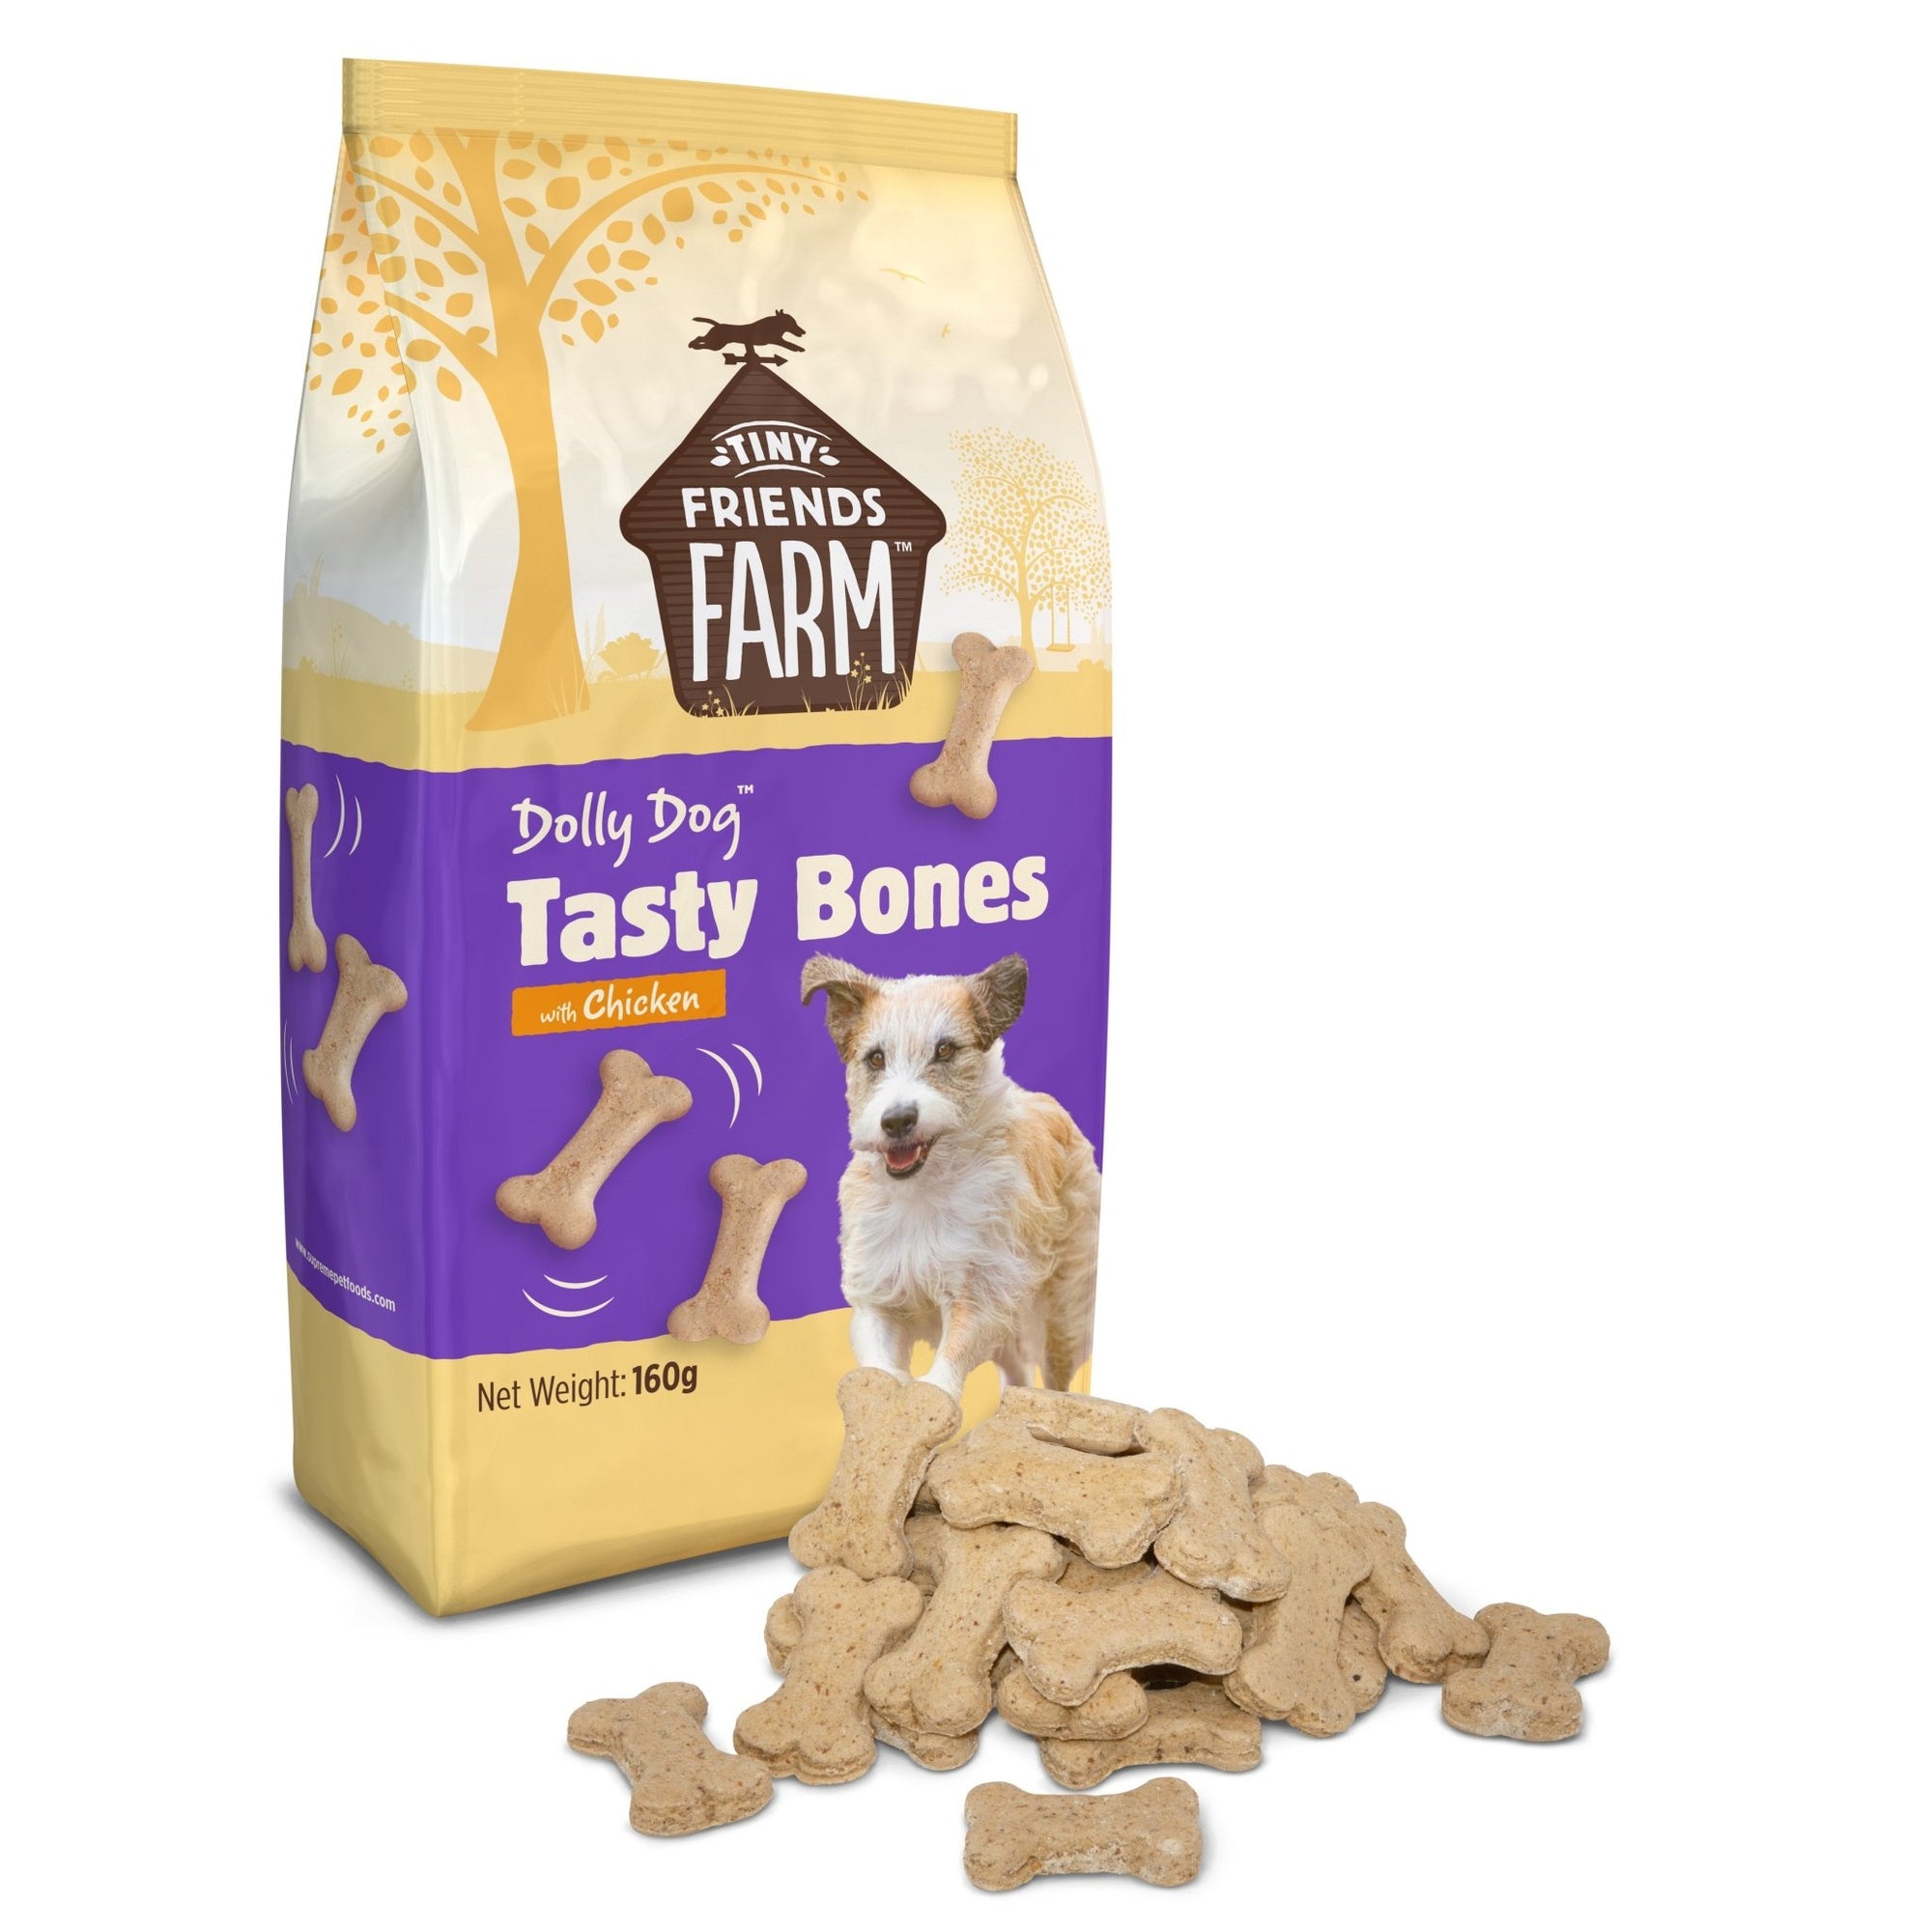 Tiny Friends Farm Dolly Dog Tasty Bones with Chicken Dog Treats 6x160g, Supreme Pet Foods,